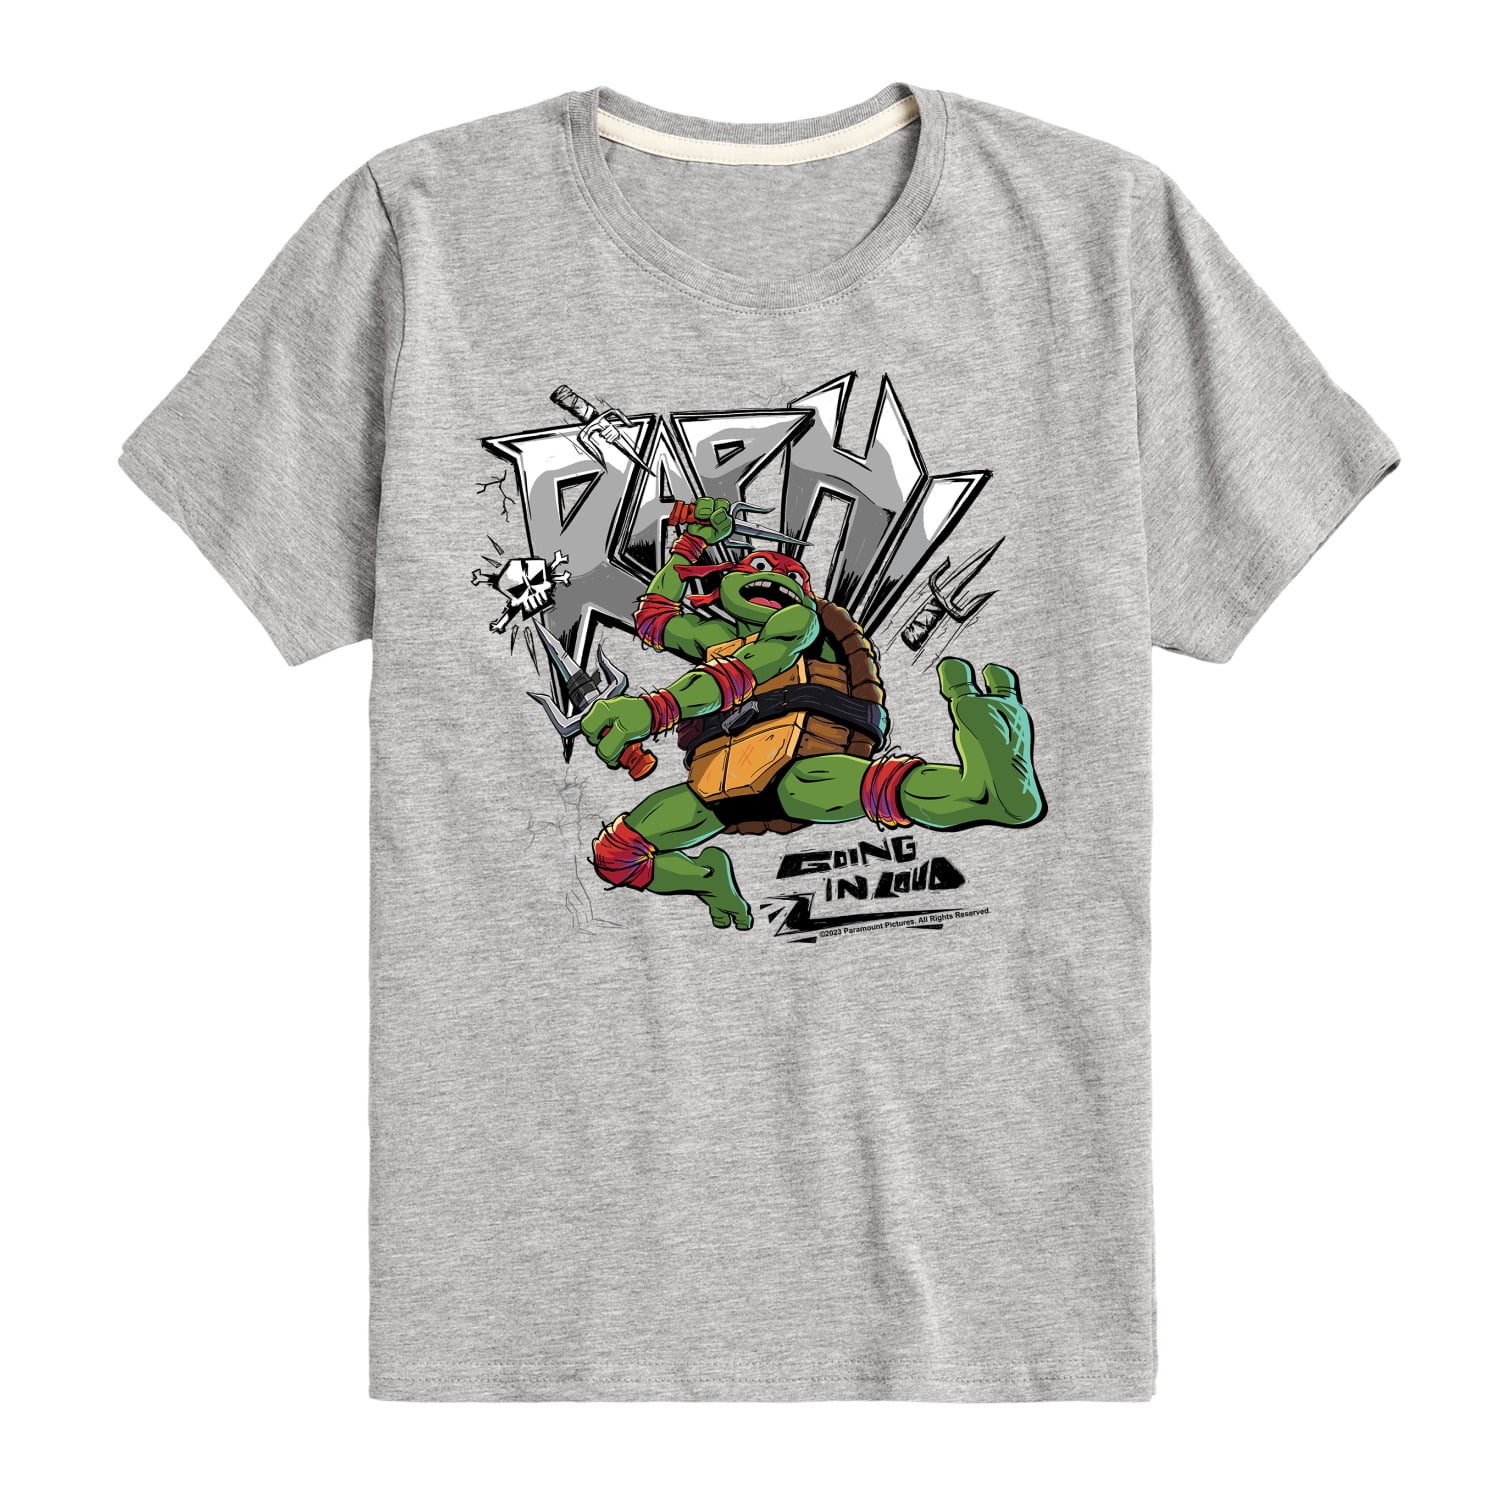 Teenage Mutant Ninja Turtles Raphael Toddler Boys Athletic Graphic T-Shirt Mesh Shorts Black / Green 2T